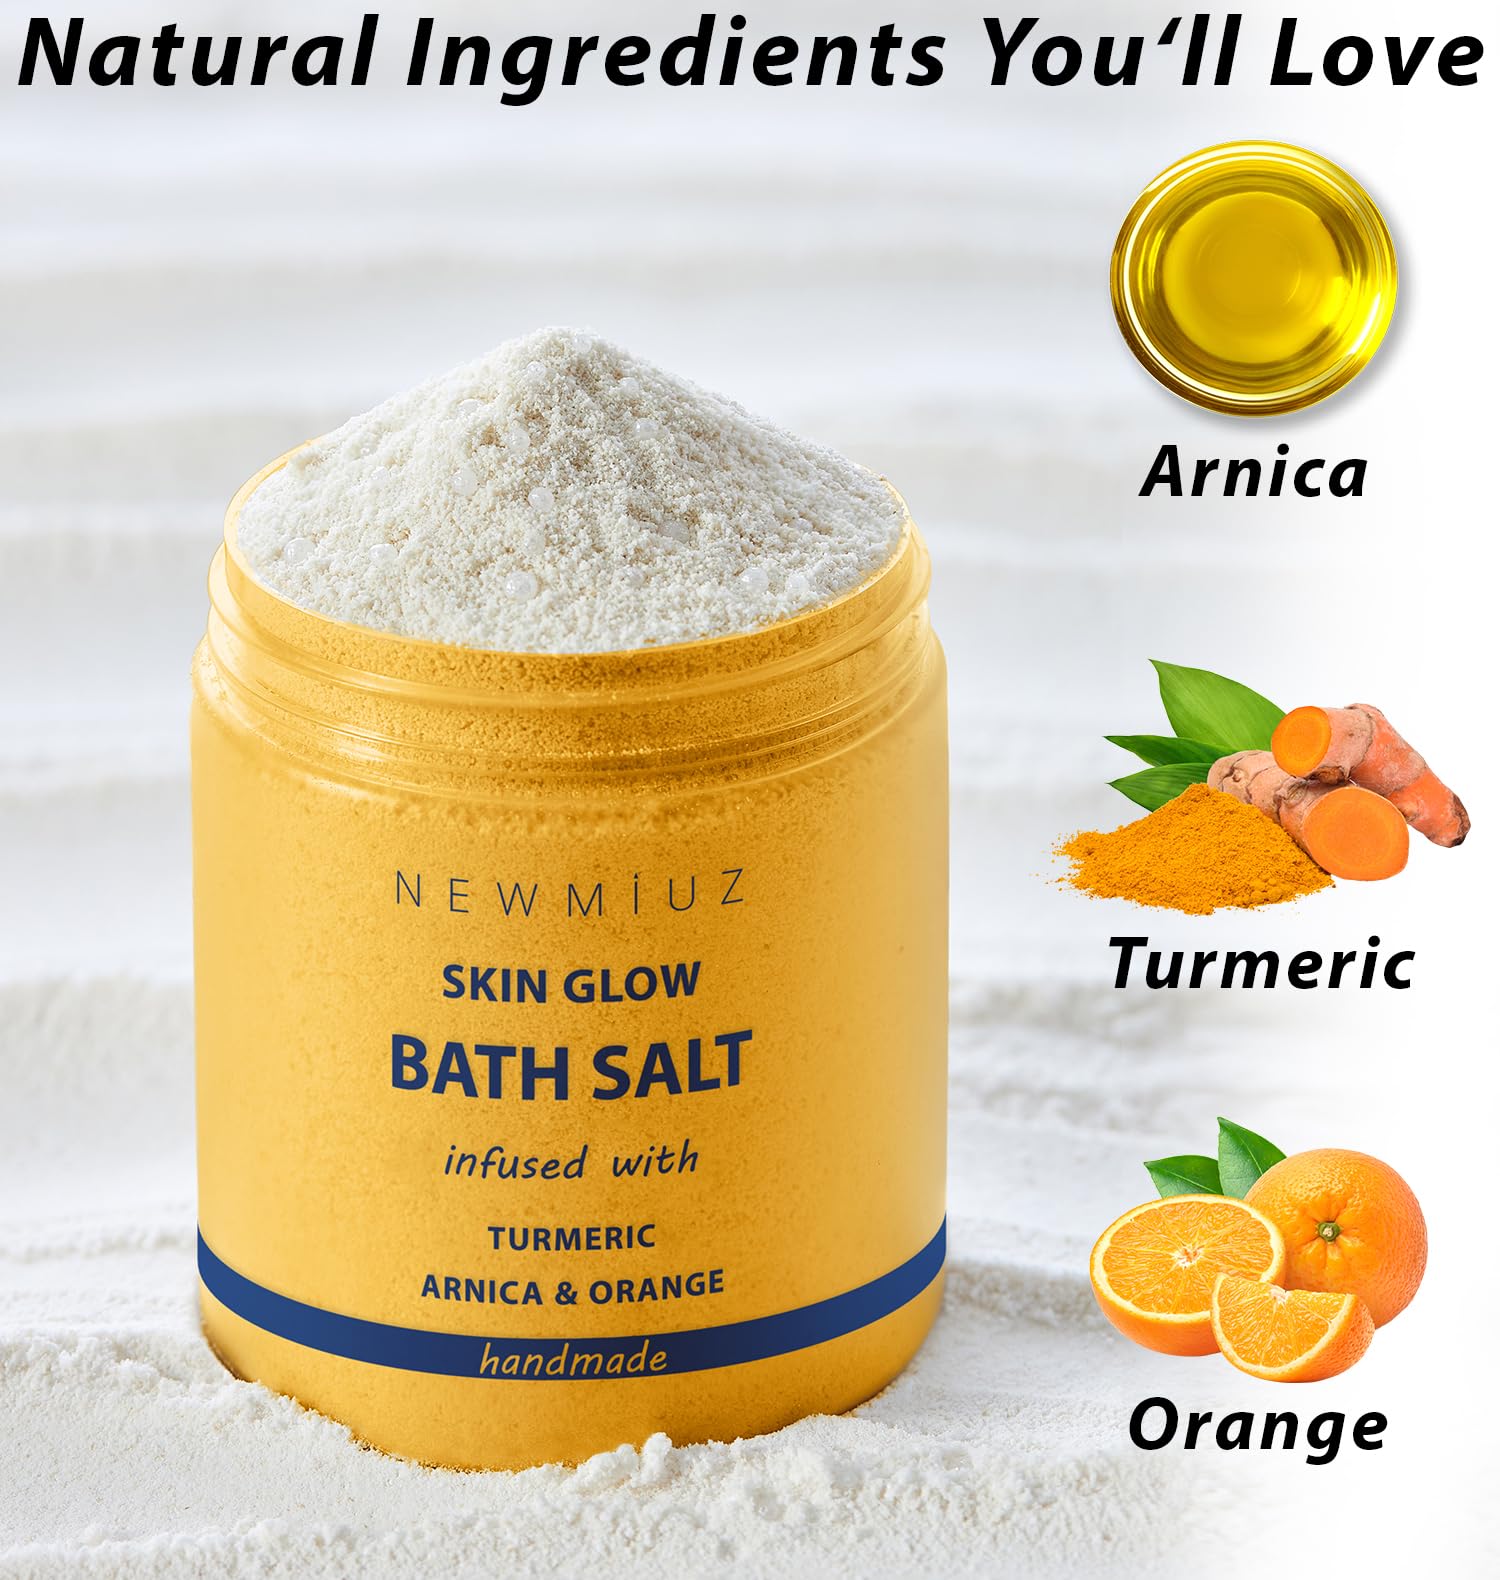 Collagen Spa Bath Gift Set - Pack of 3 Turmeric Arnica Orange Magensium Epsom Salt Milk Bath